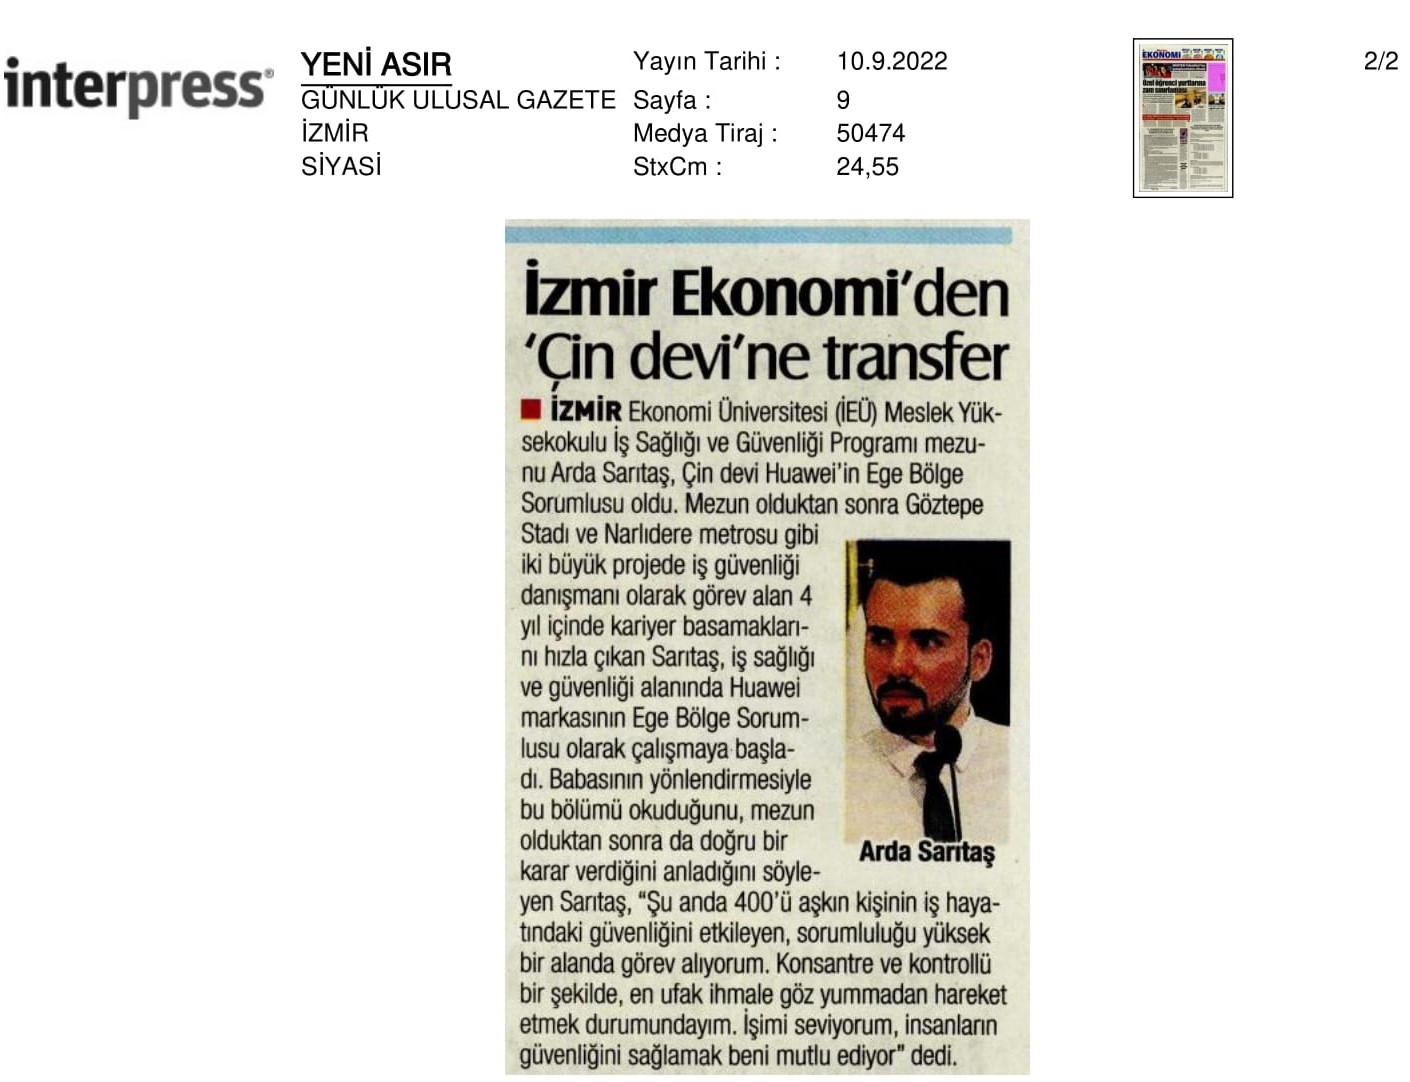 İzmir Ekonomi’den 'Çin devine’ transfer